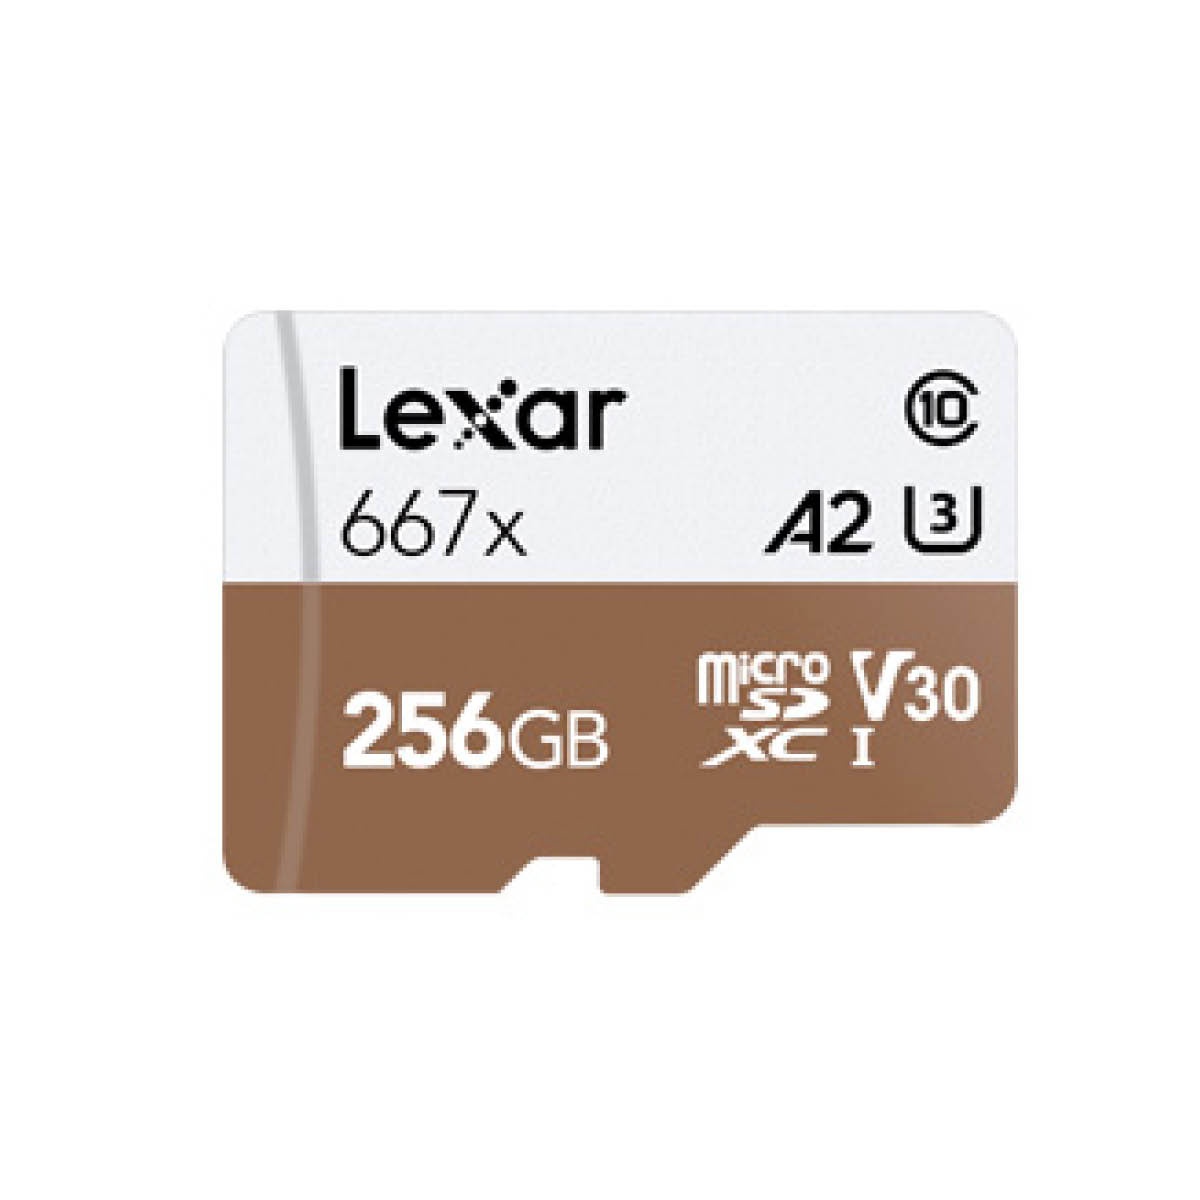 Lexar microSDXC 256GB Professional UHS-I 667x